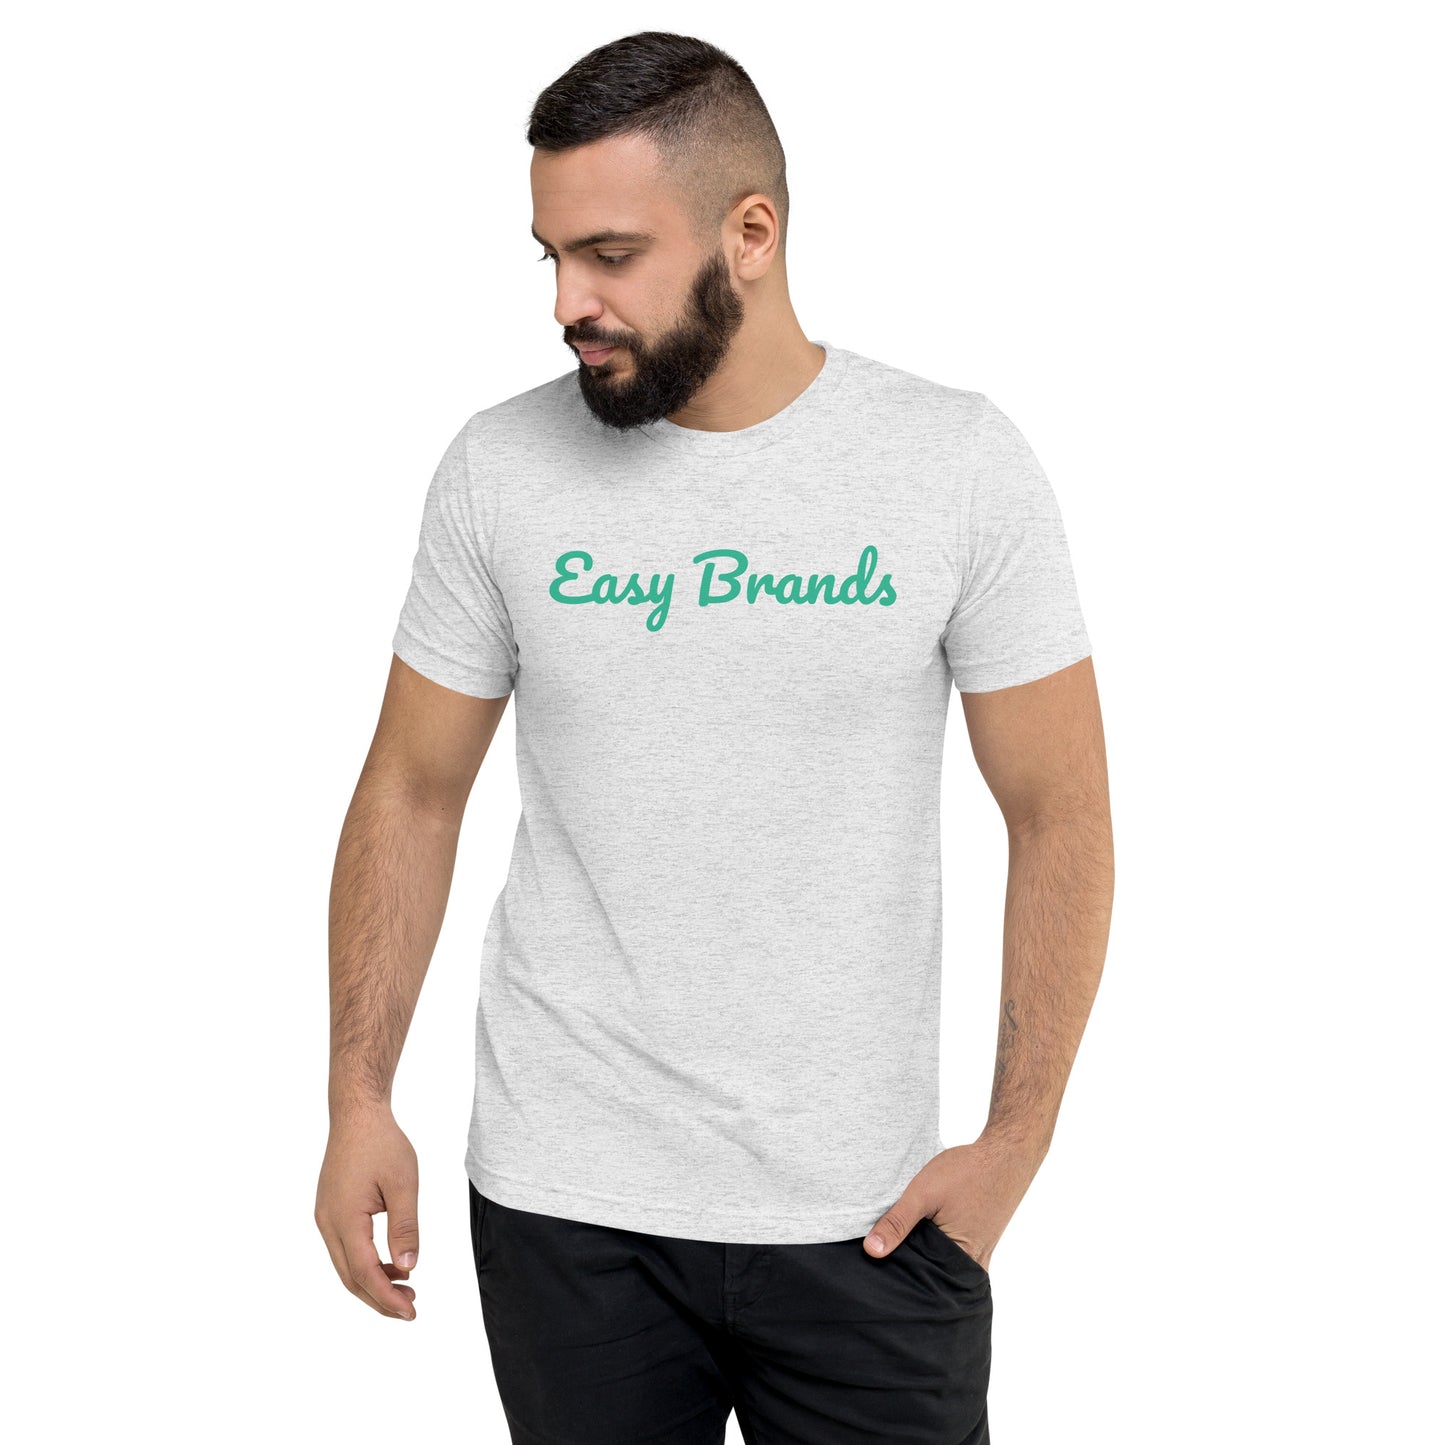 Extra-soft Triblend T-shirt